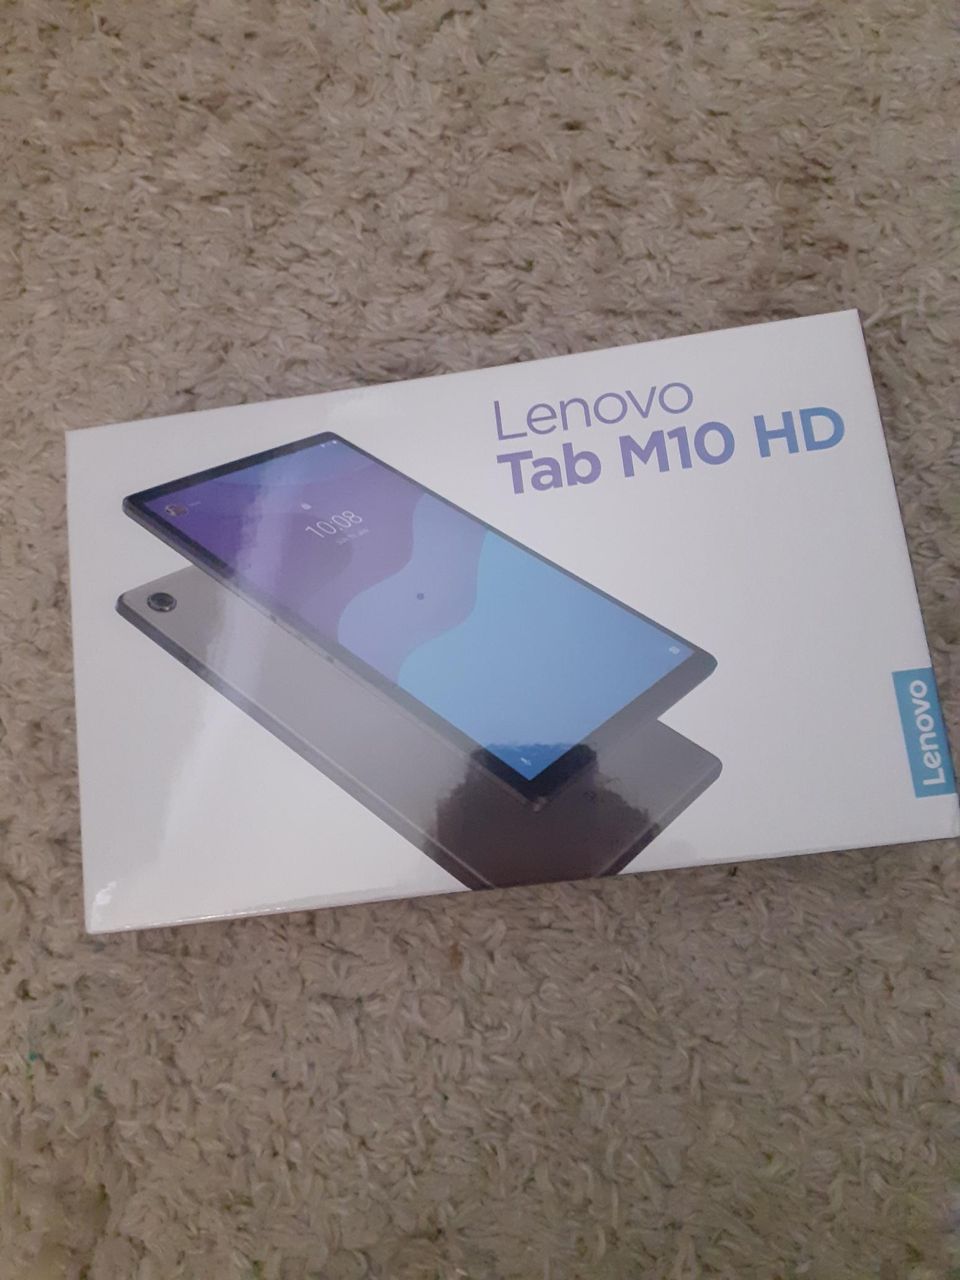 Lenovo tabletti M10 HD